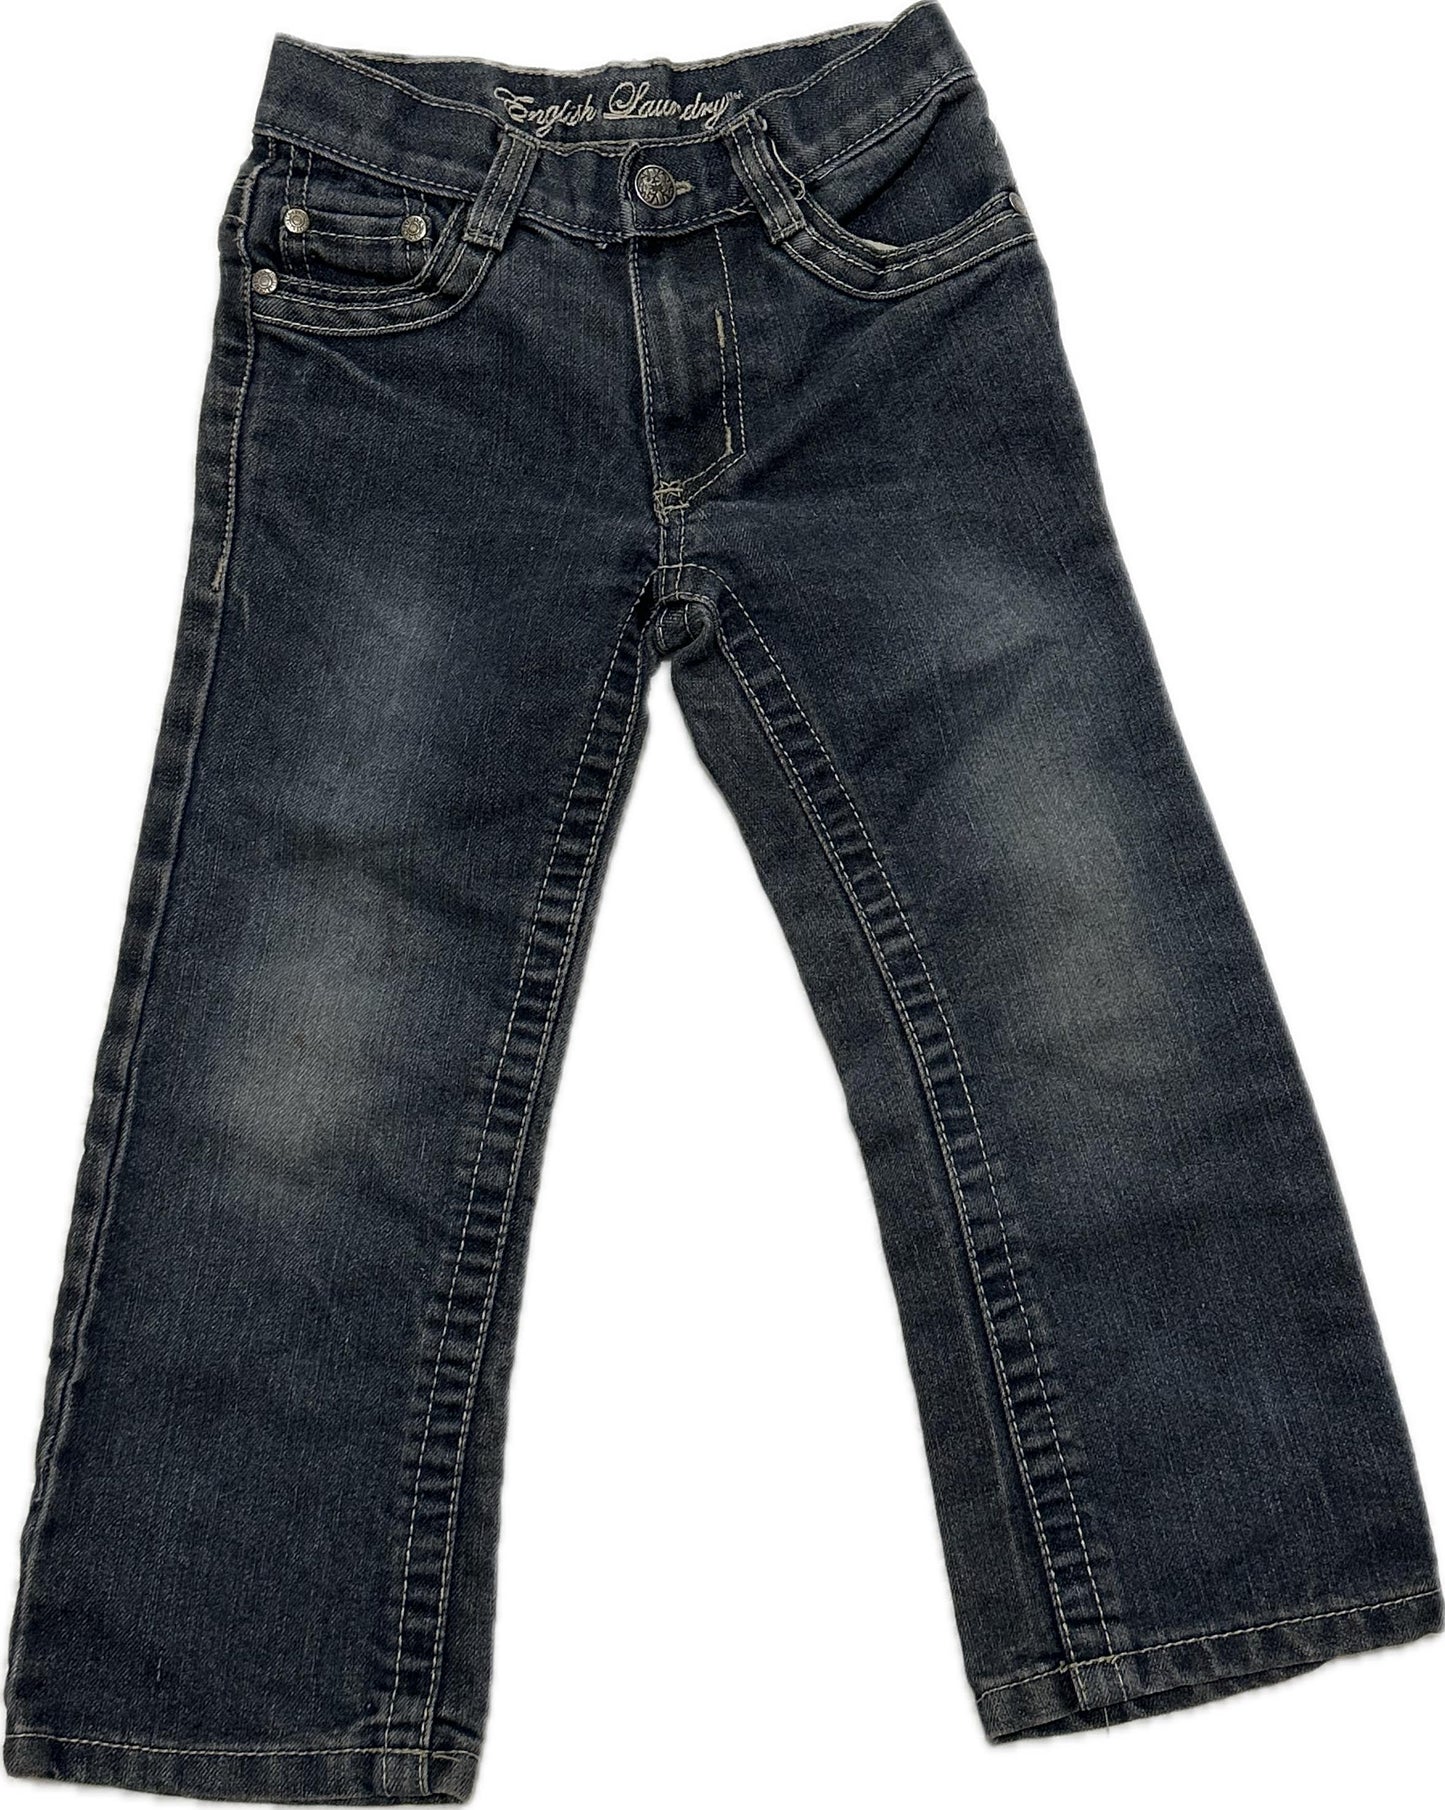 Boy's Blue Jeans